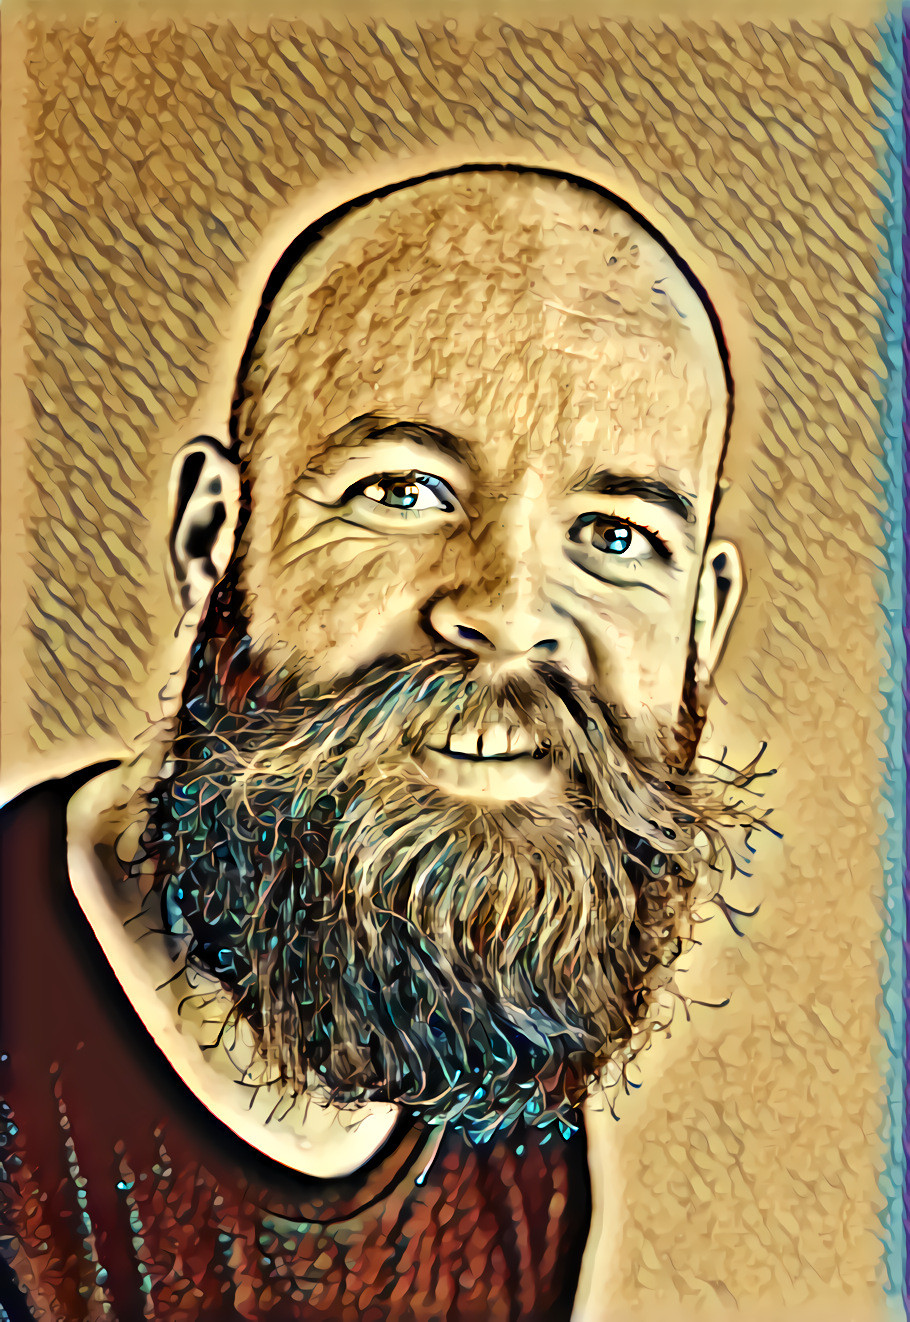 Man with Beard (Photo by Craig McKay on Unsplash)